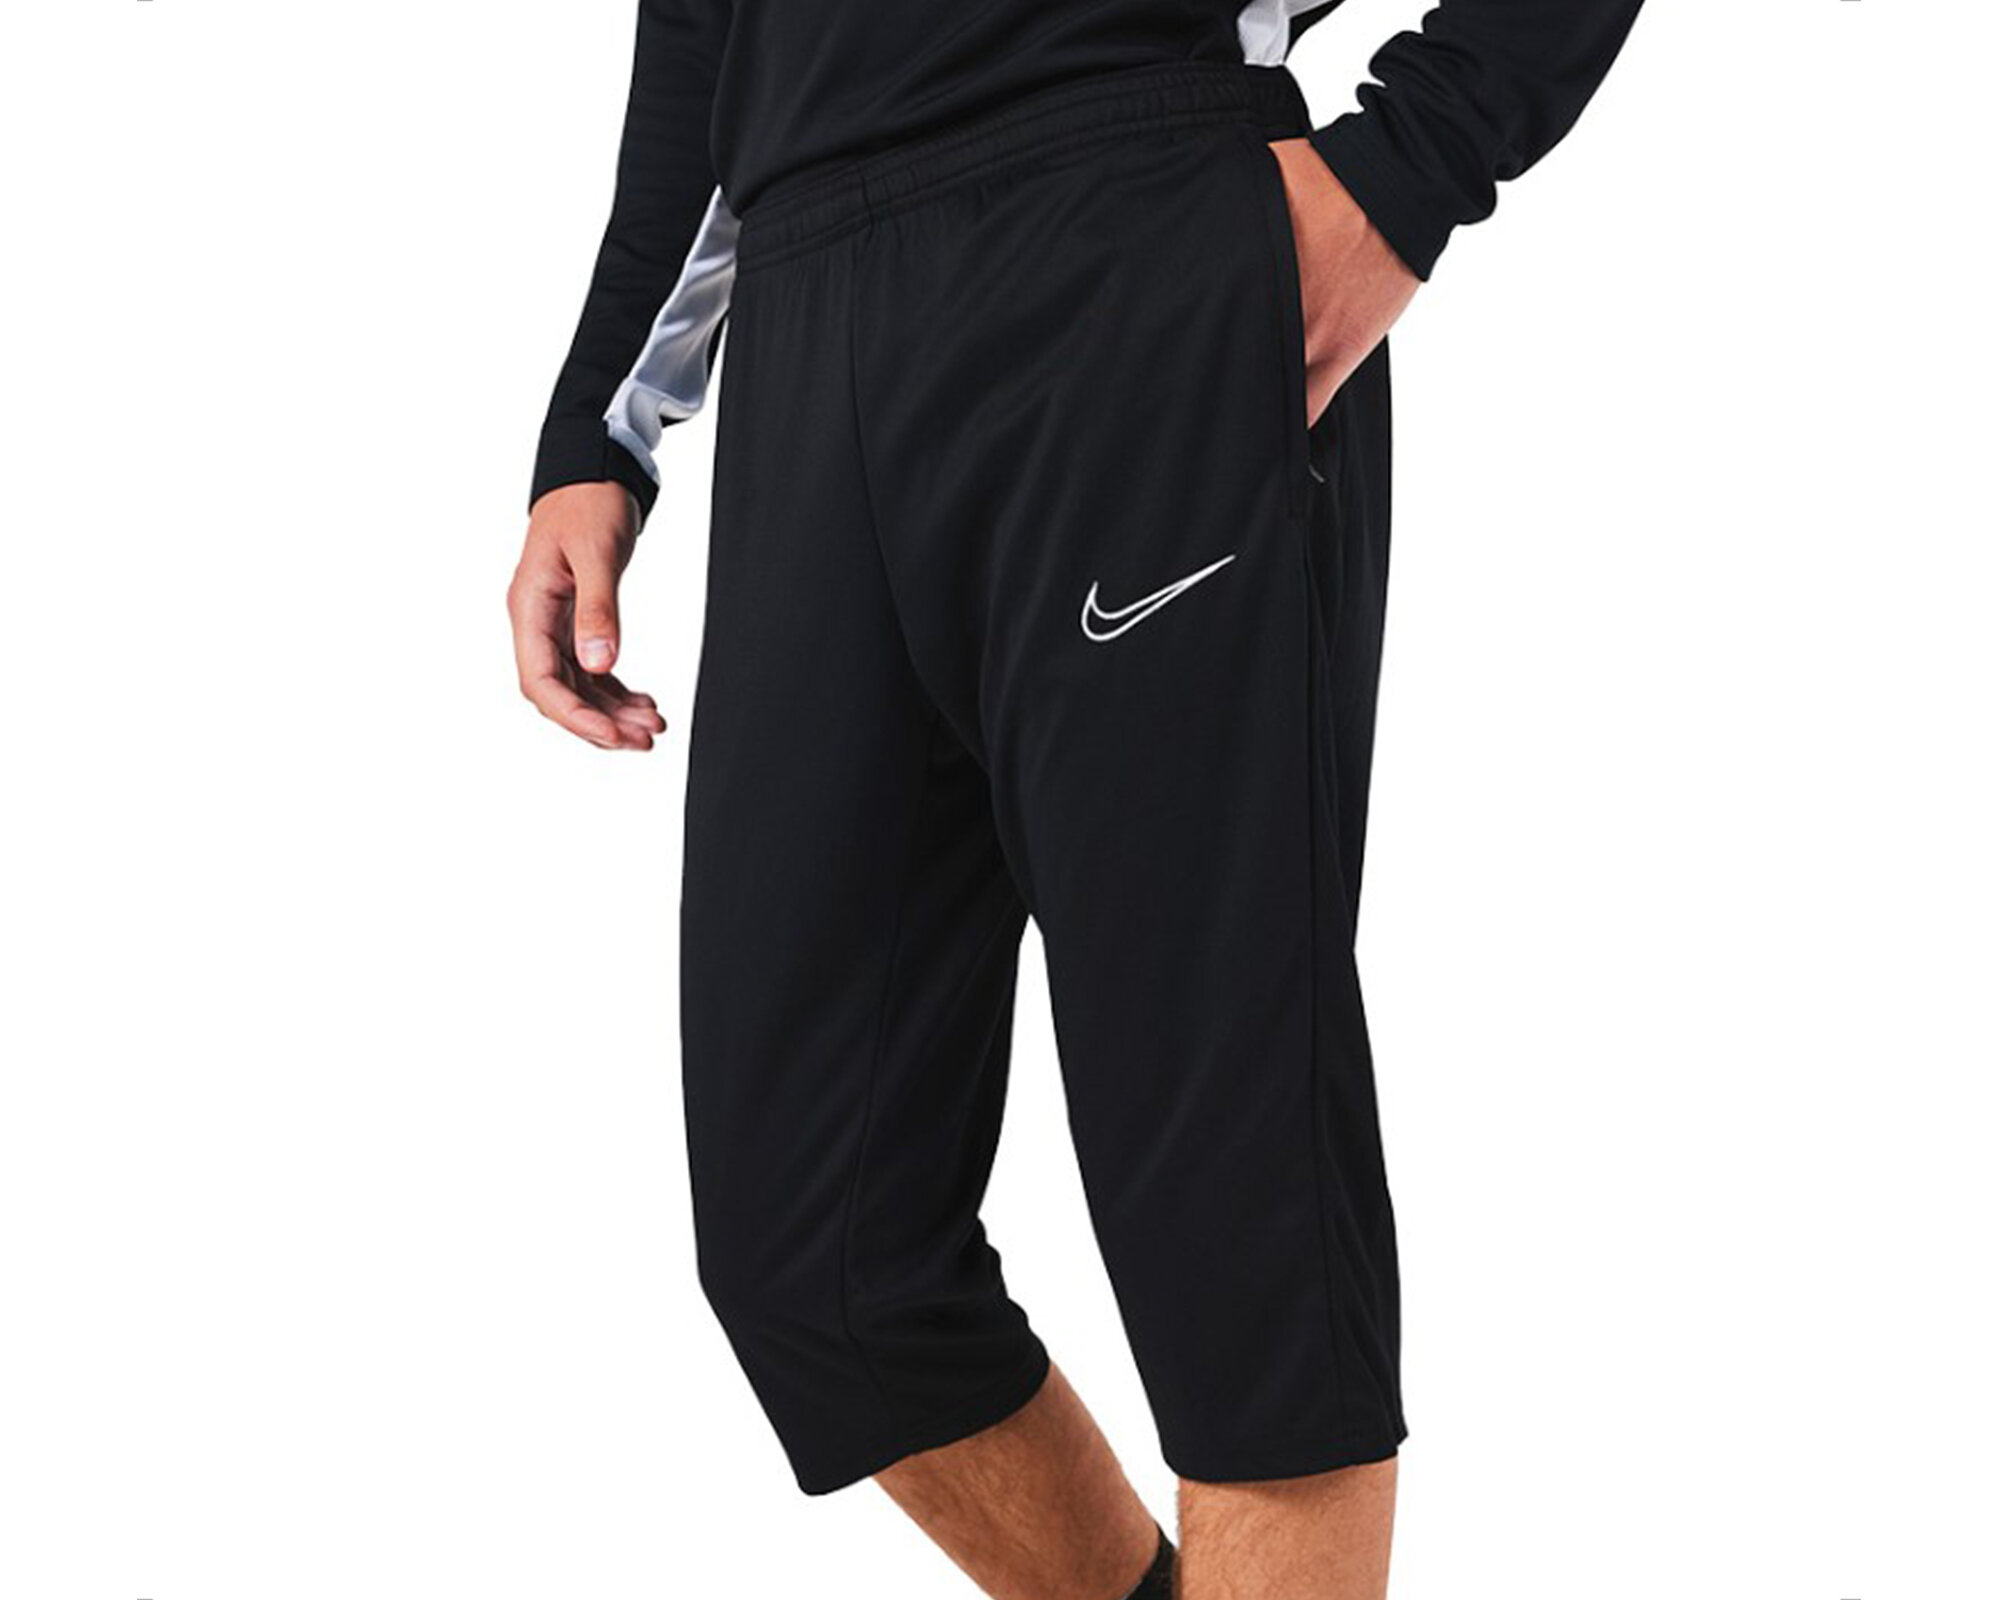 Nike Dri-Fit Academy Erkek Siyah Uzun Şort (DR1365-010)